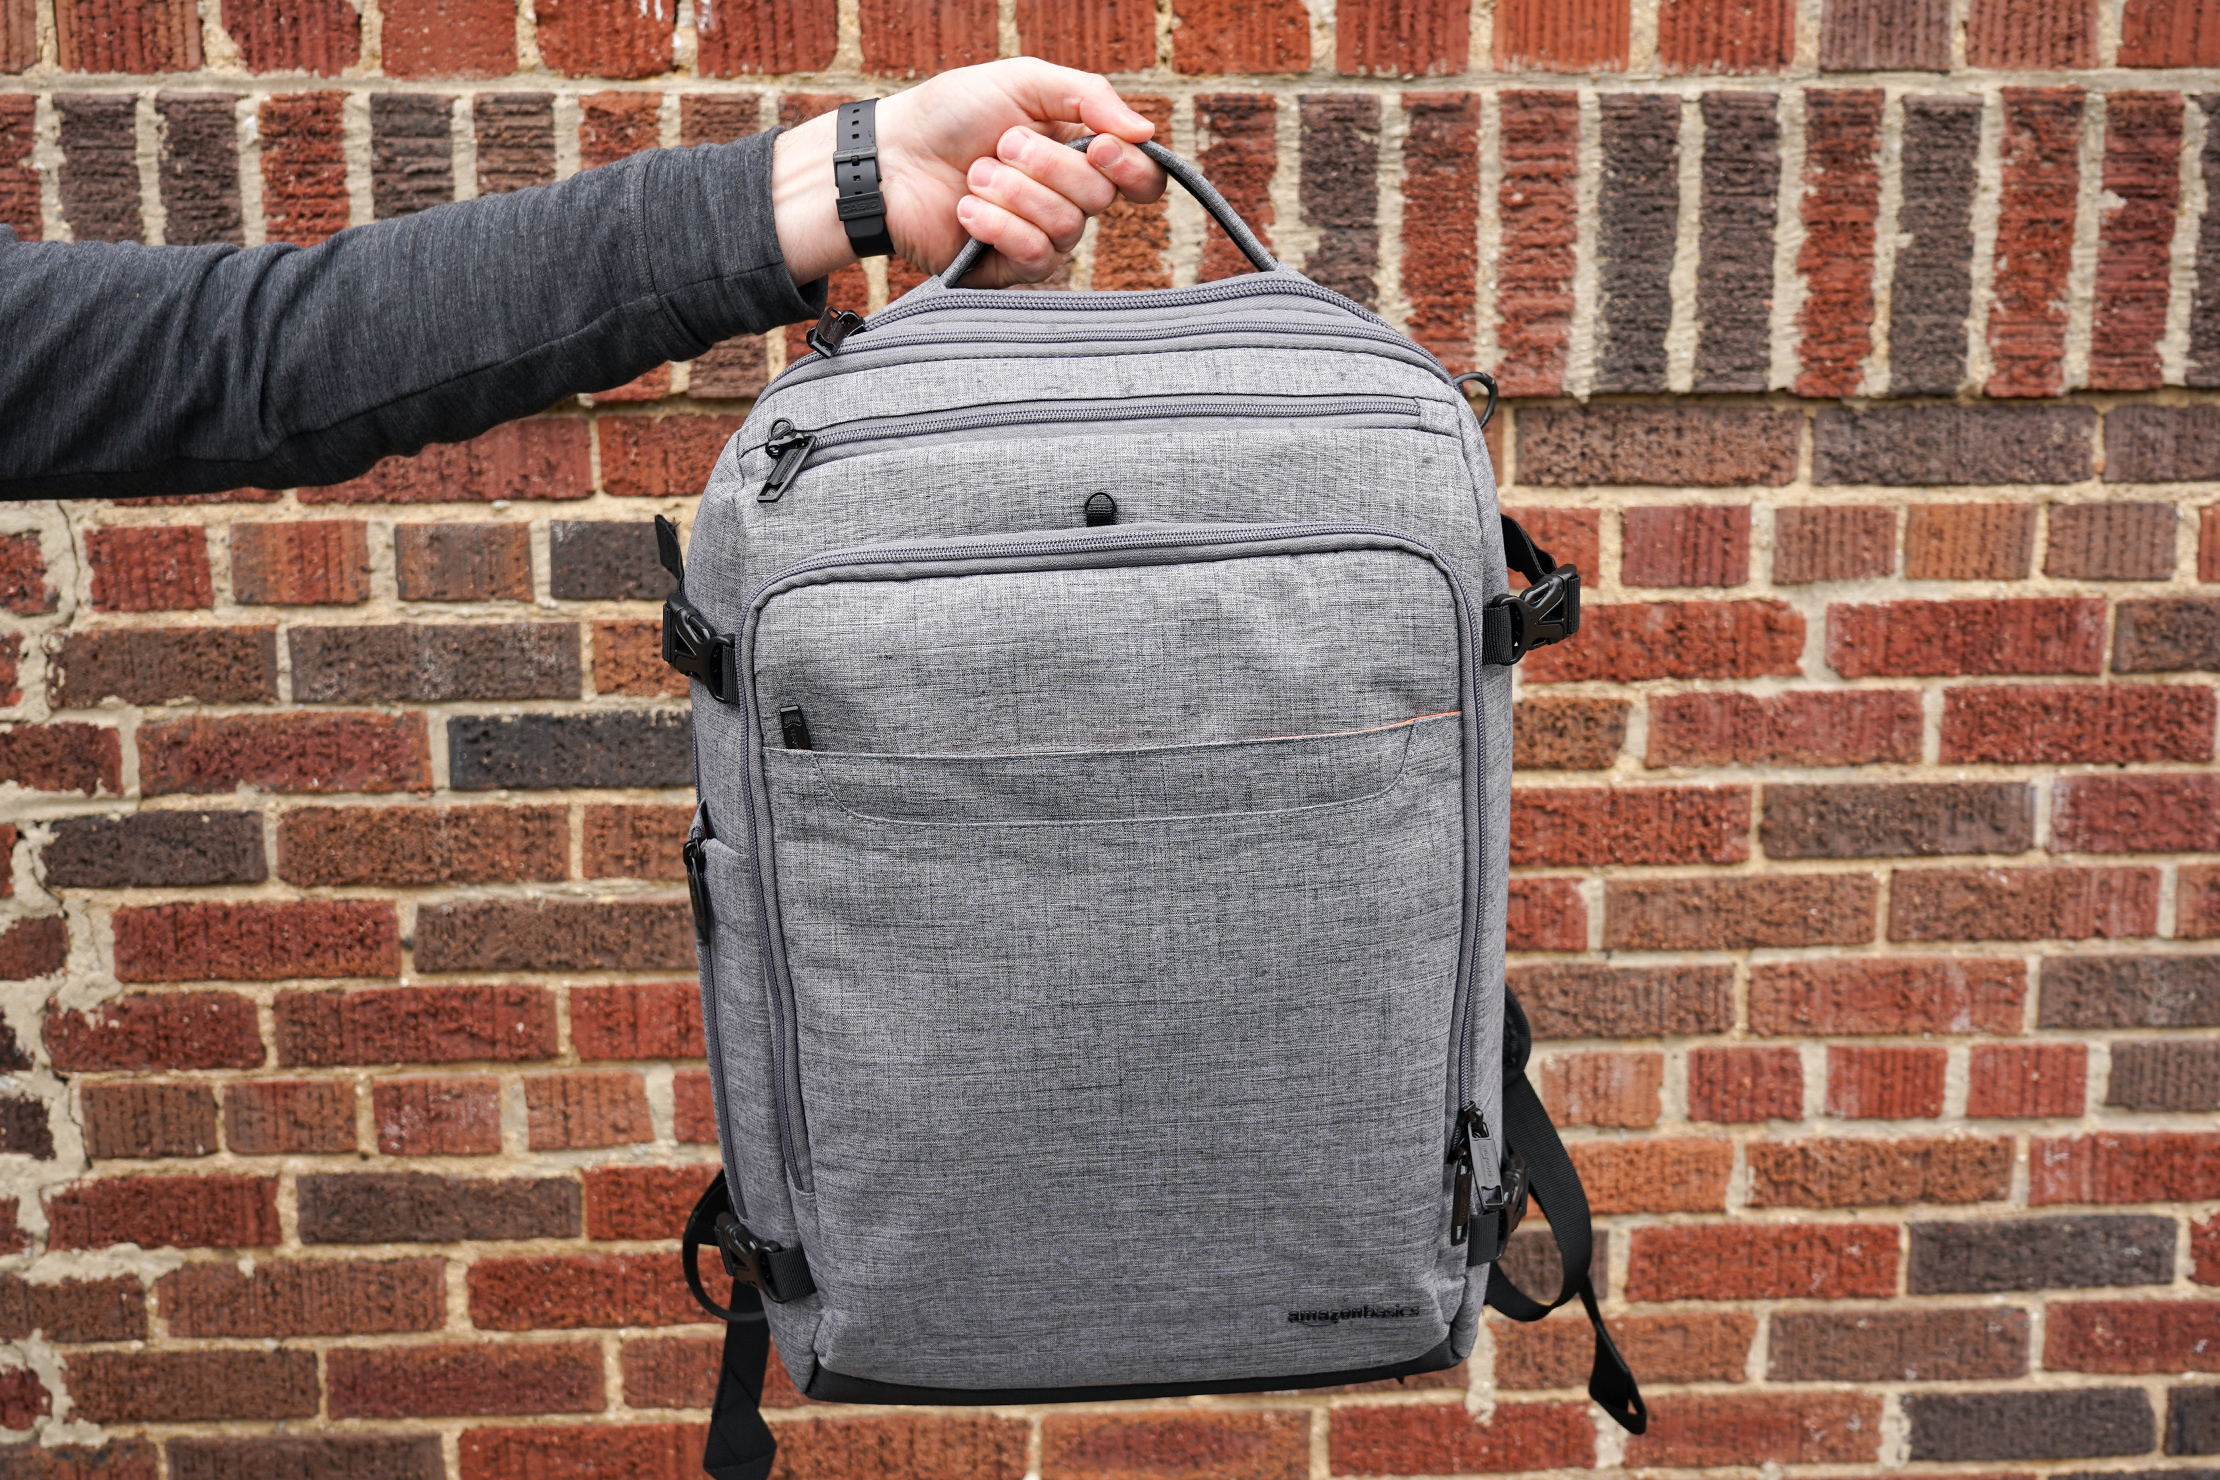 AmazonBasics Slim Travel Backpack Weekender Quick Grab Handle